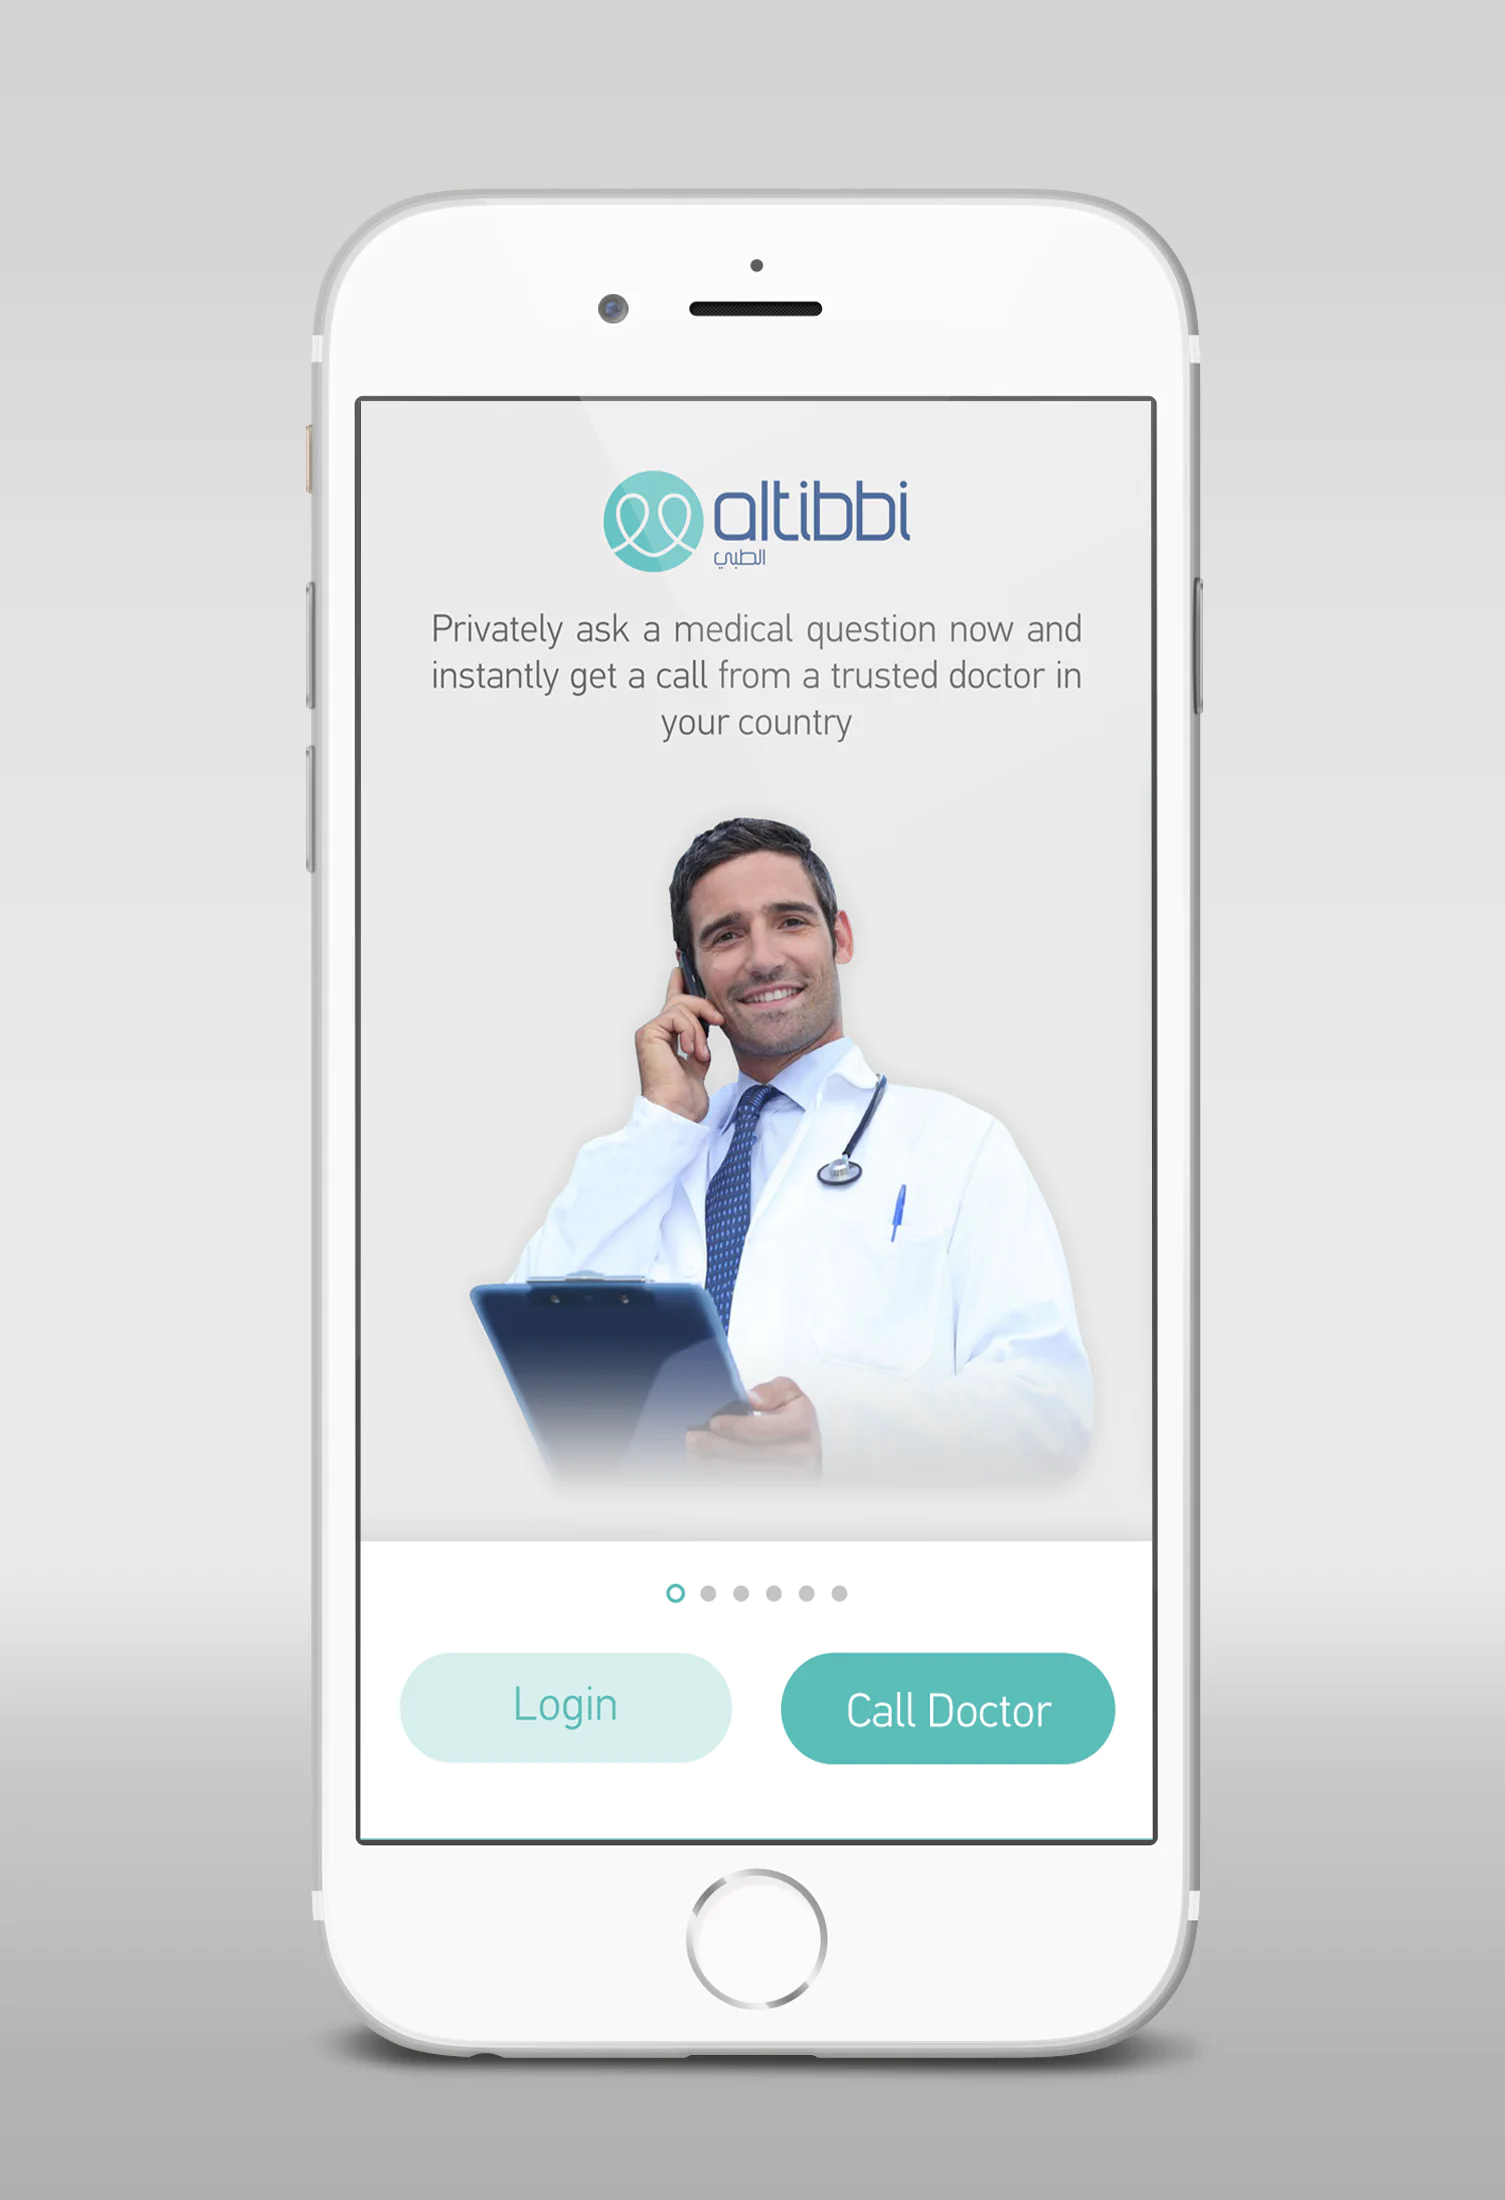 Altibbi medical assistance UI shown on mobile device